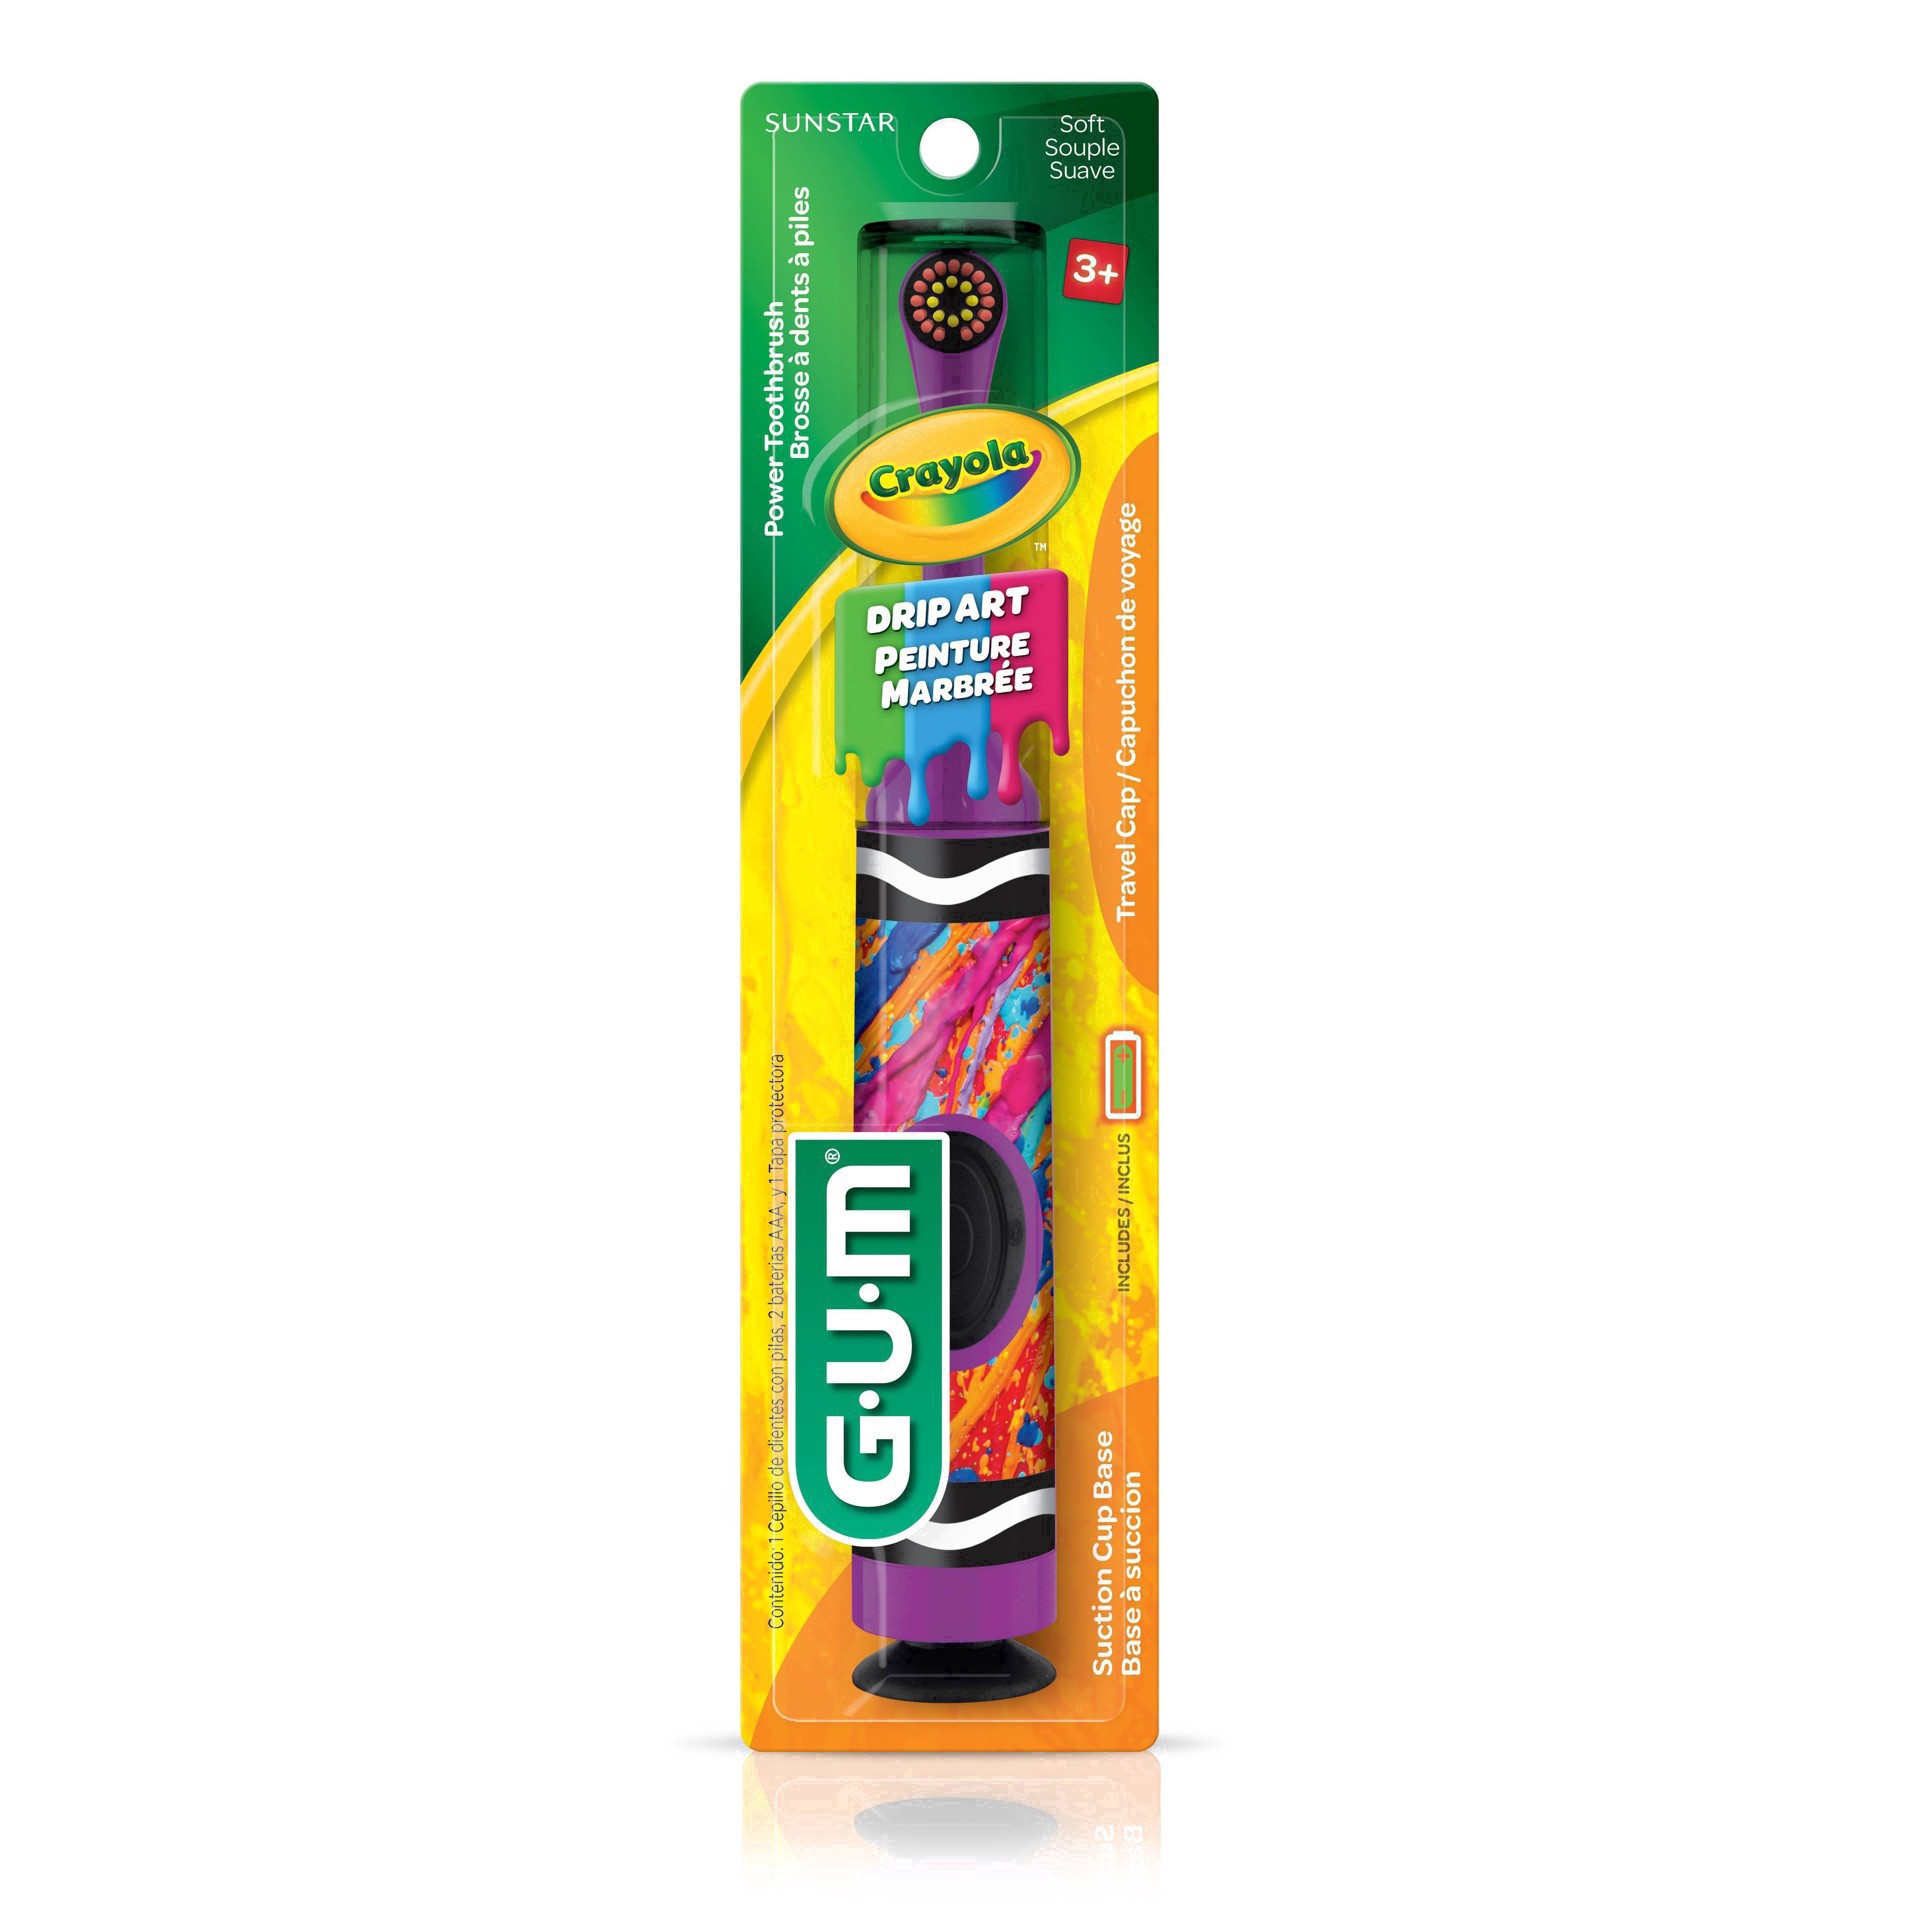 slide 20 of 50, G-U-M Crayola Electric Toothbrush, 1 ct